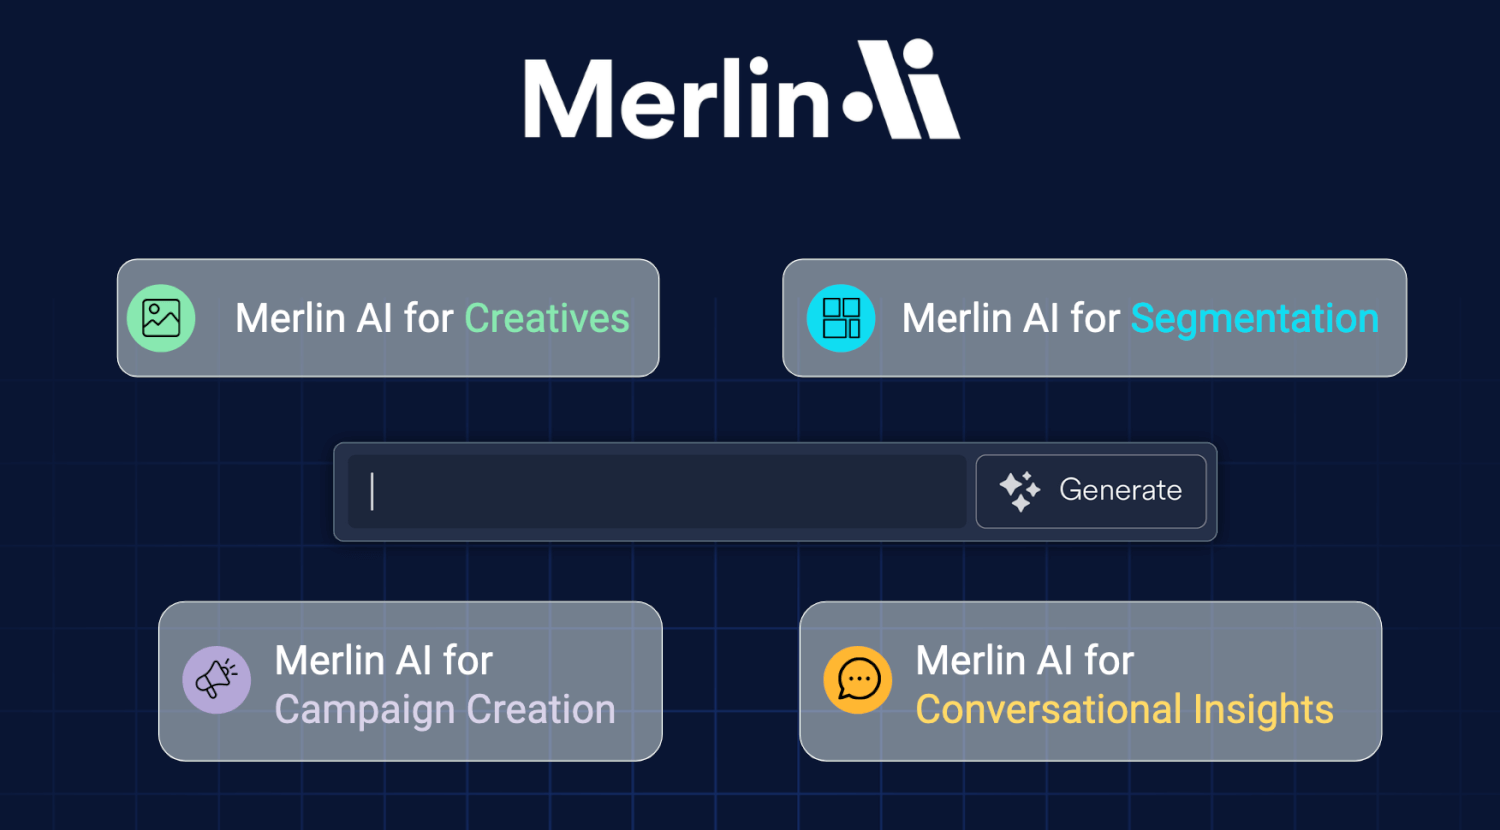 New upcoming capabilities of Merlin AI